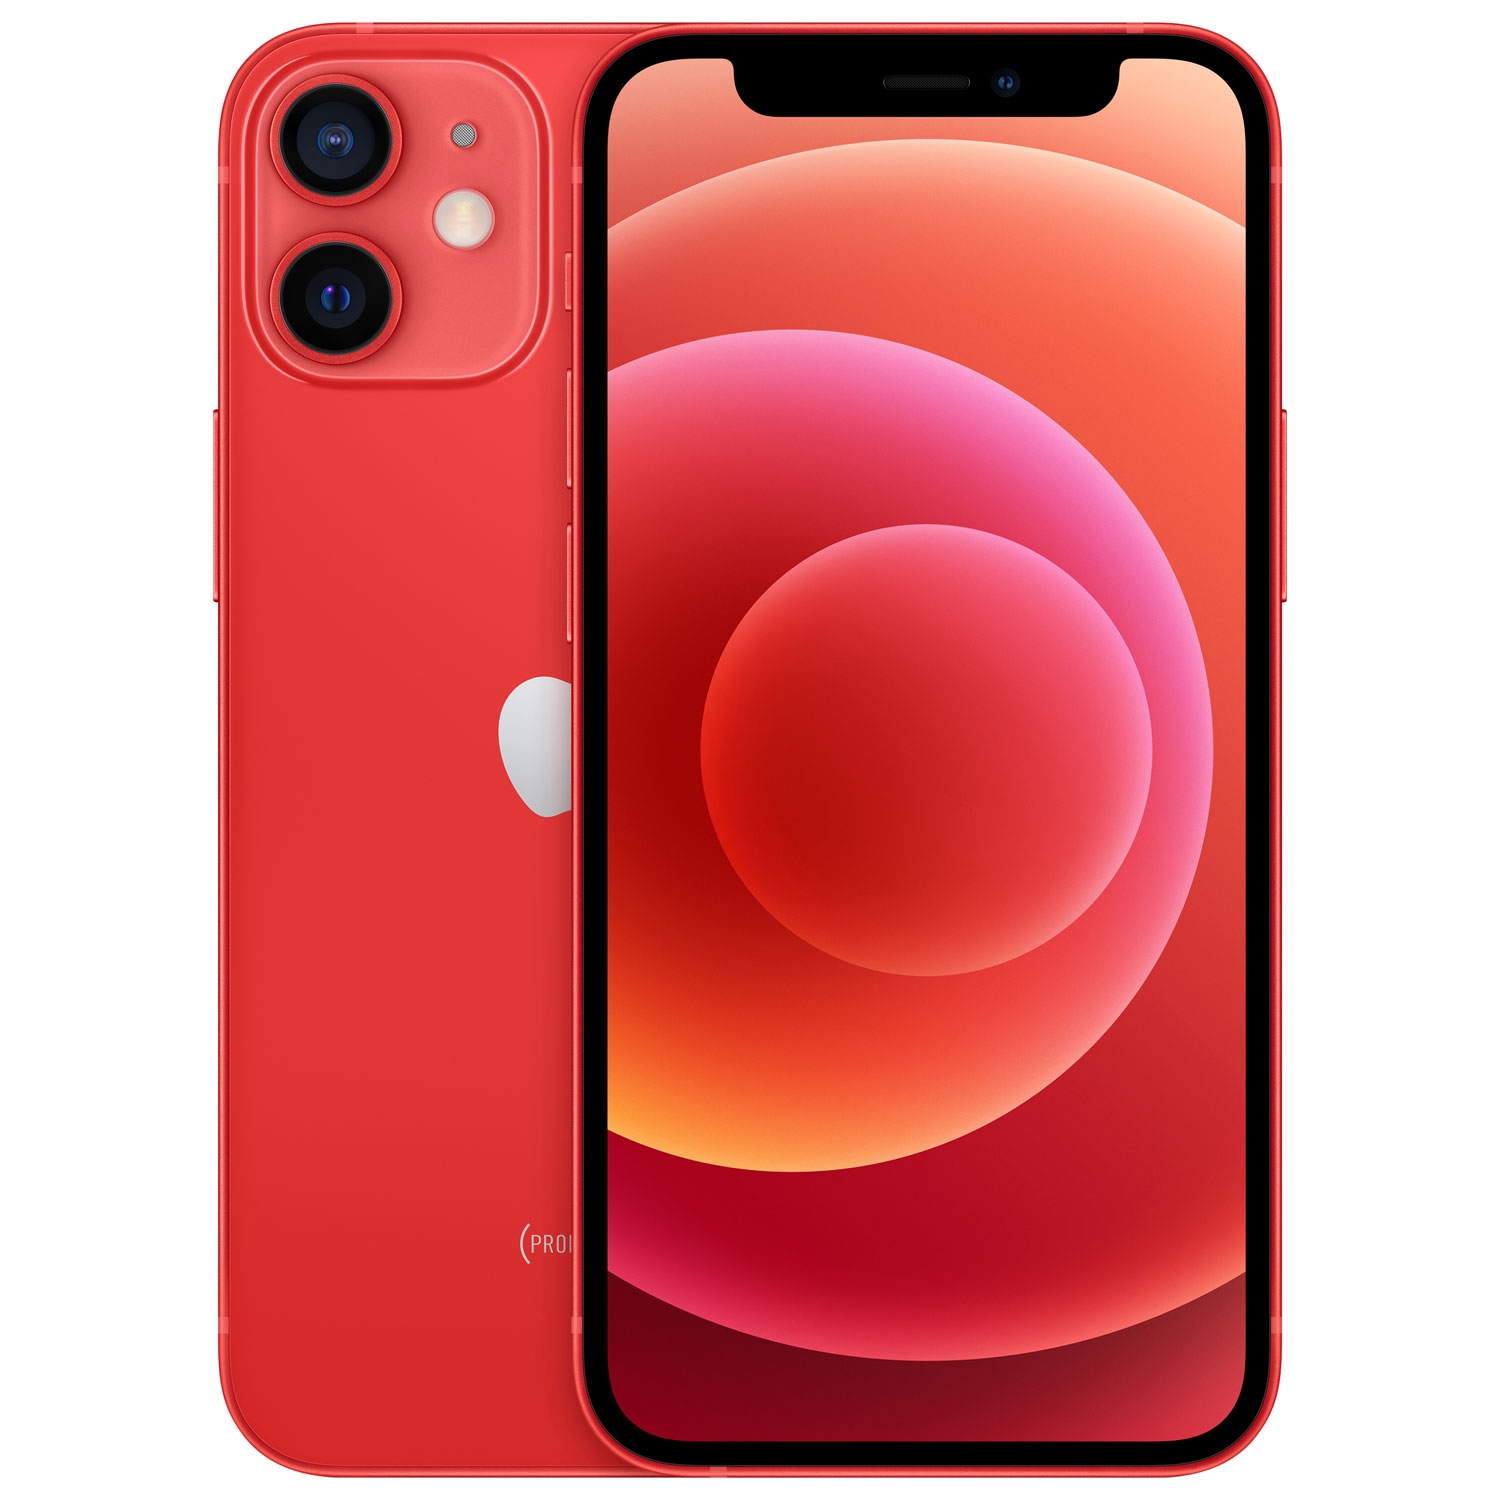 Refurbished (Good) - Apple iPhone 12 mini 64GB - (PRODUCT)RED - Unlocked